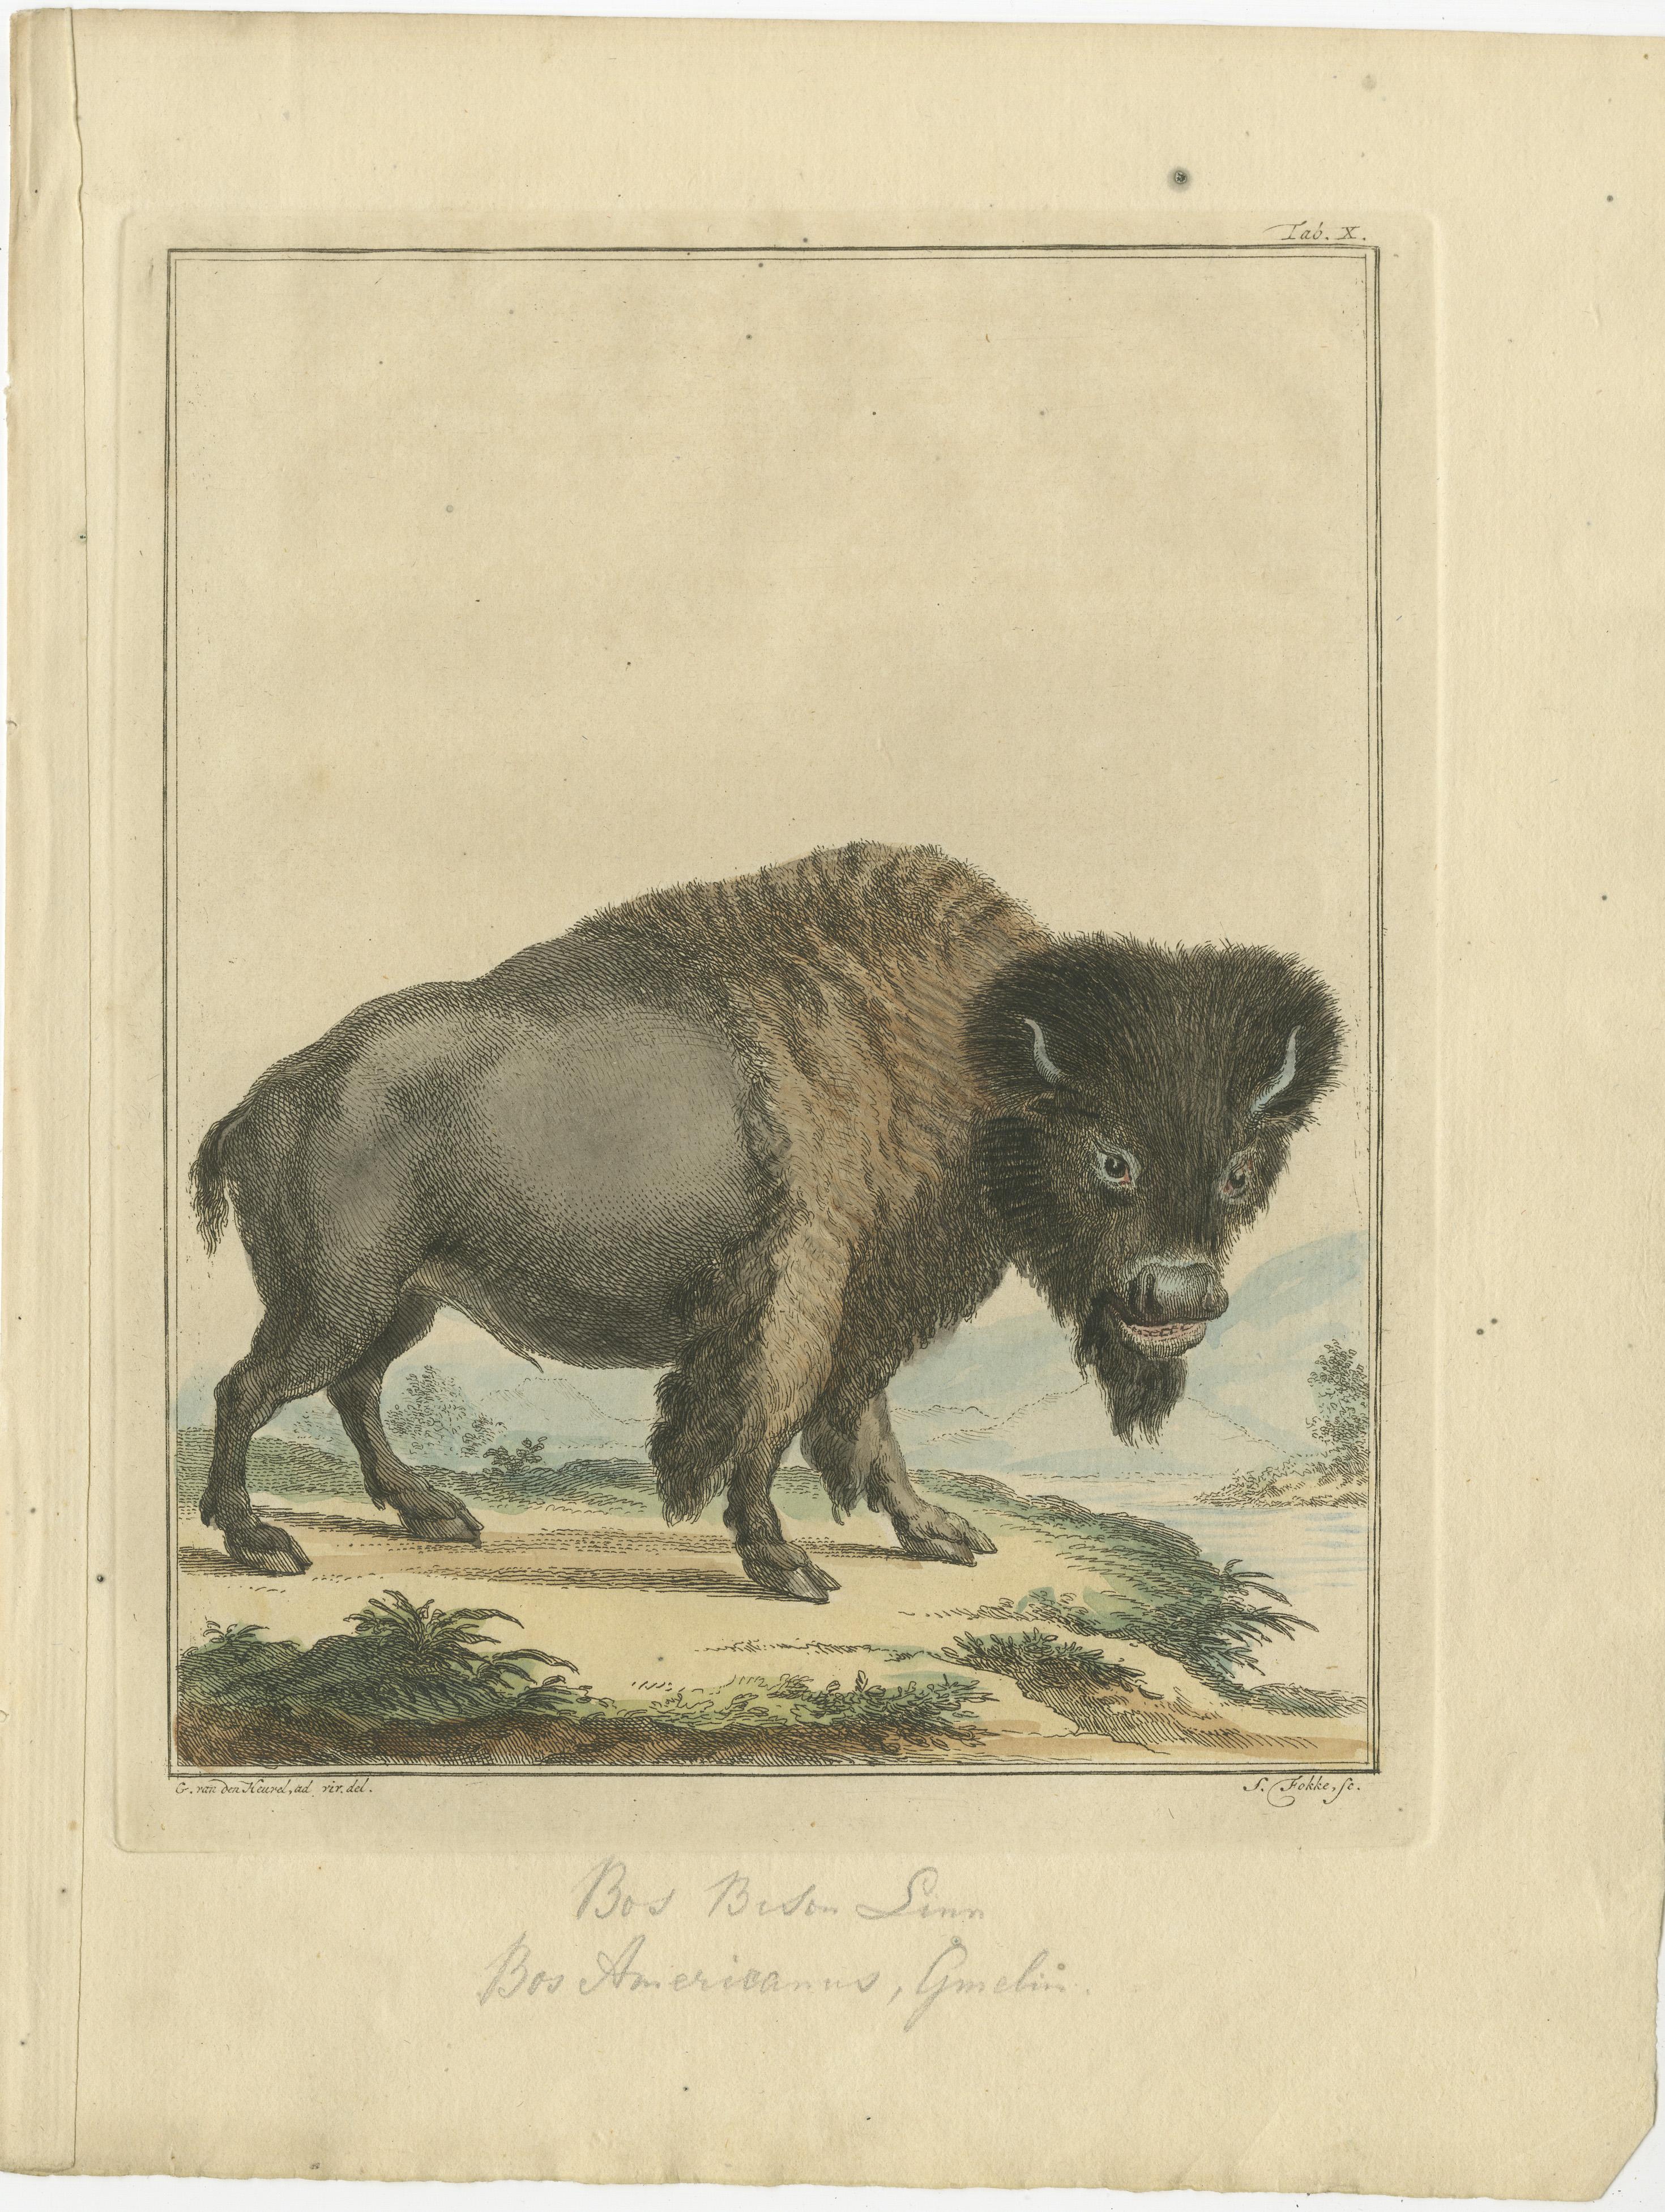 Original antique print of a bison. This print originates from 'Boeken op Google Play
Beschryving van den Amerikaanschen gebulten stier, genaamd bison (..)'by A. Vosmaer. Published by Pieter Meijer, 1772. 

Includes seperate text pages.